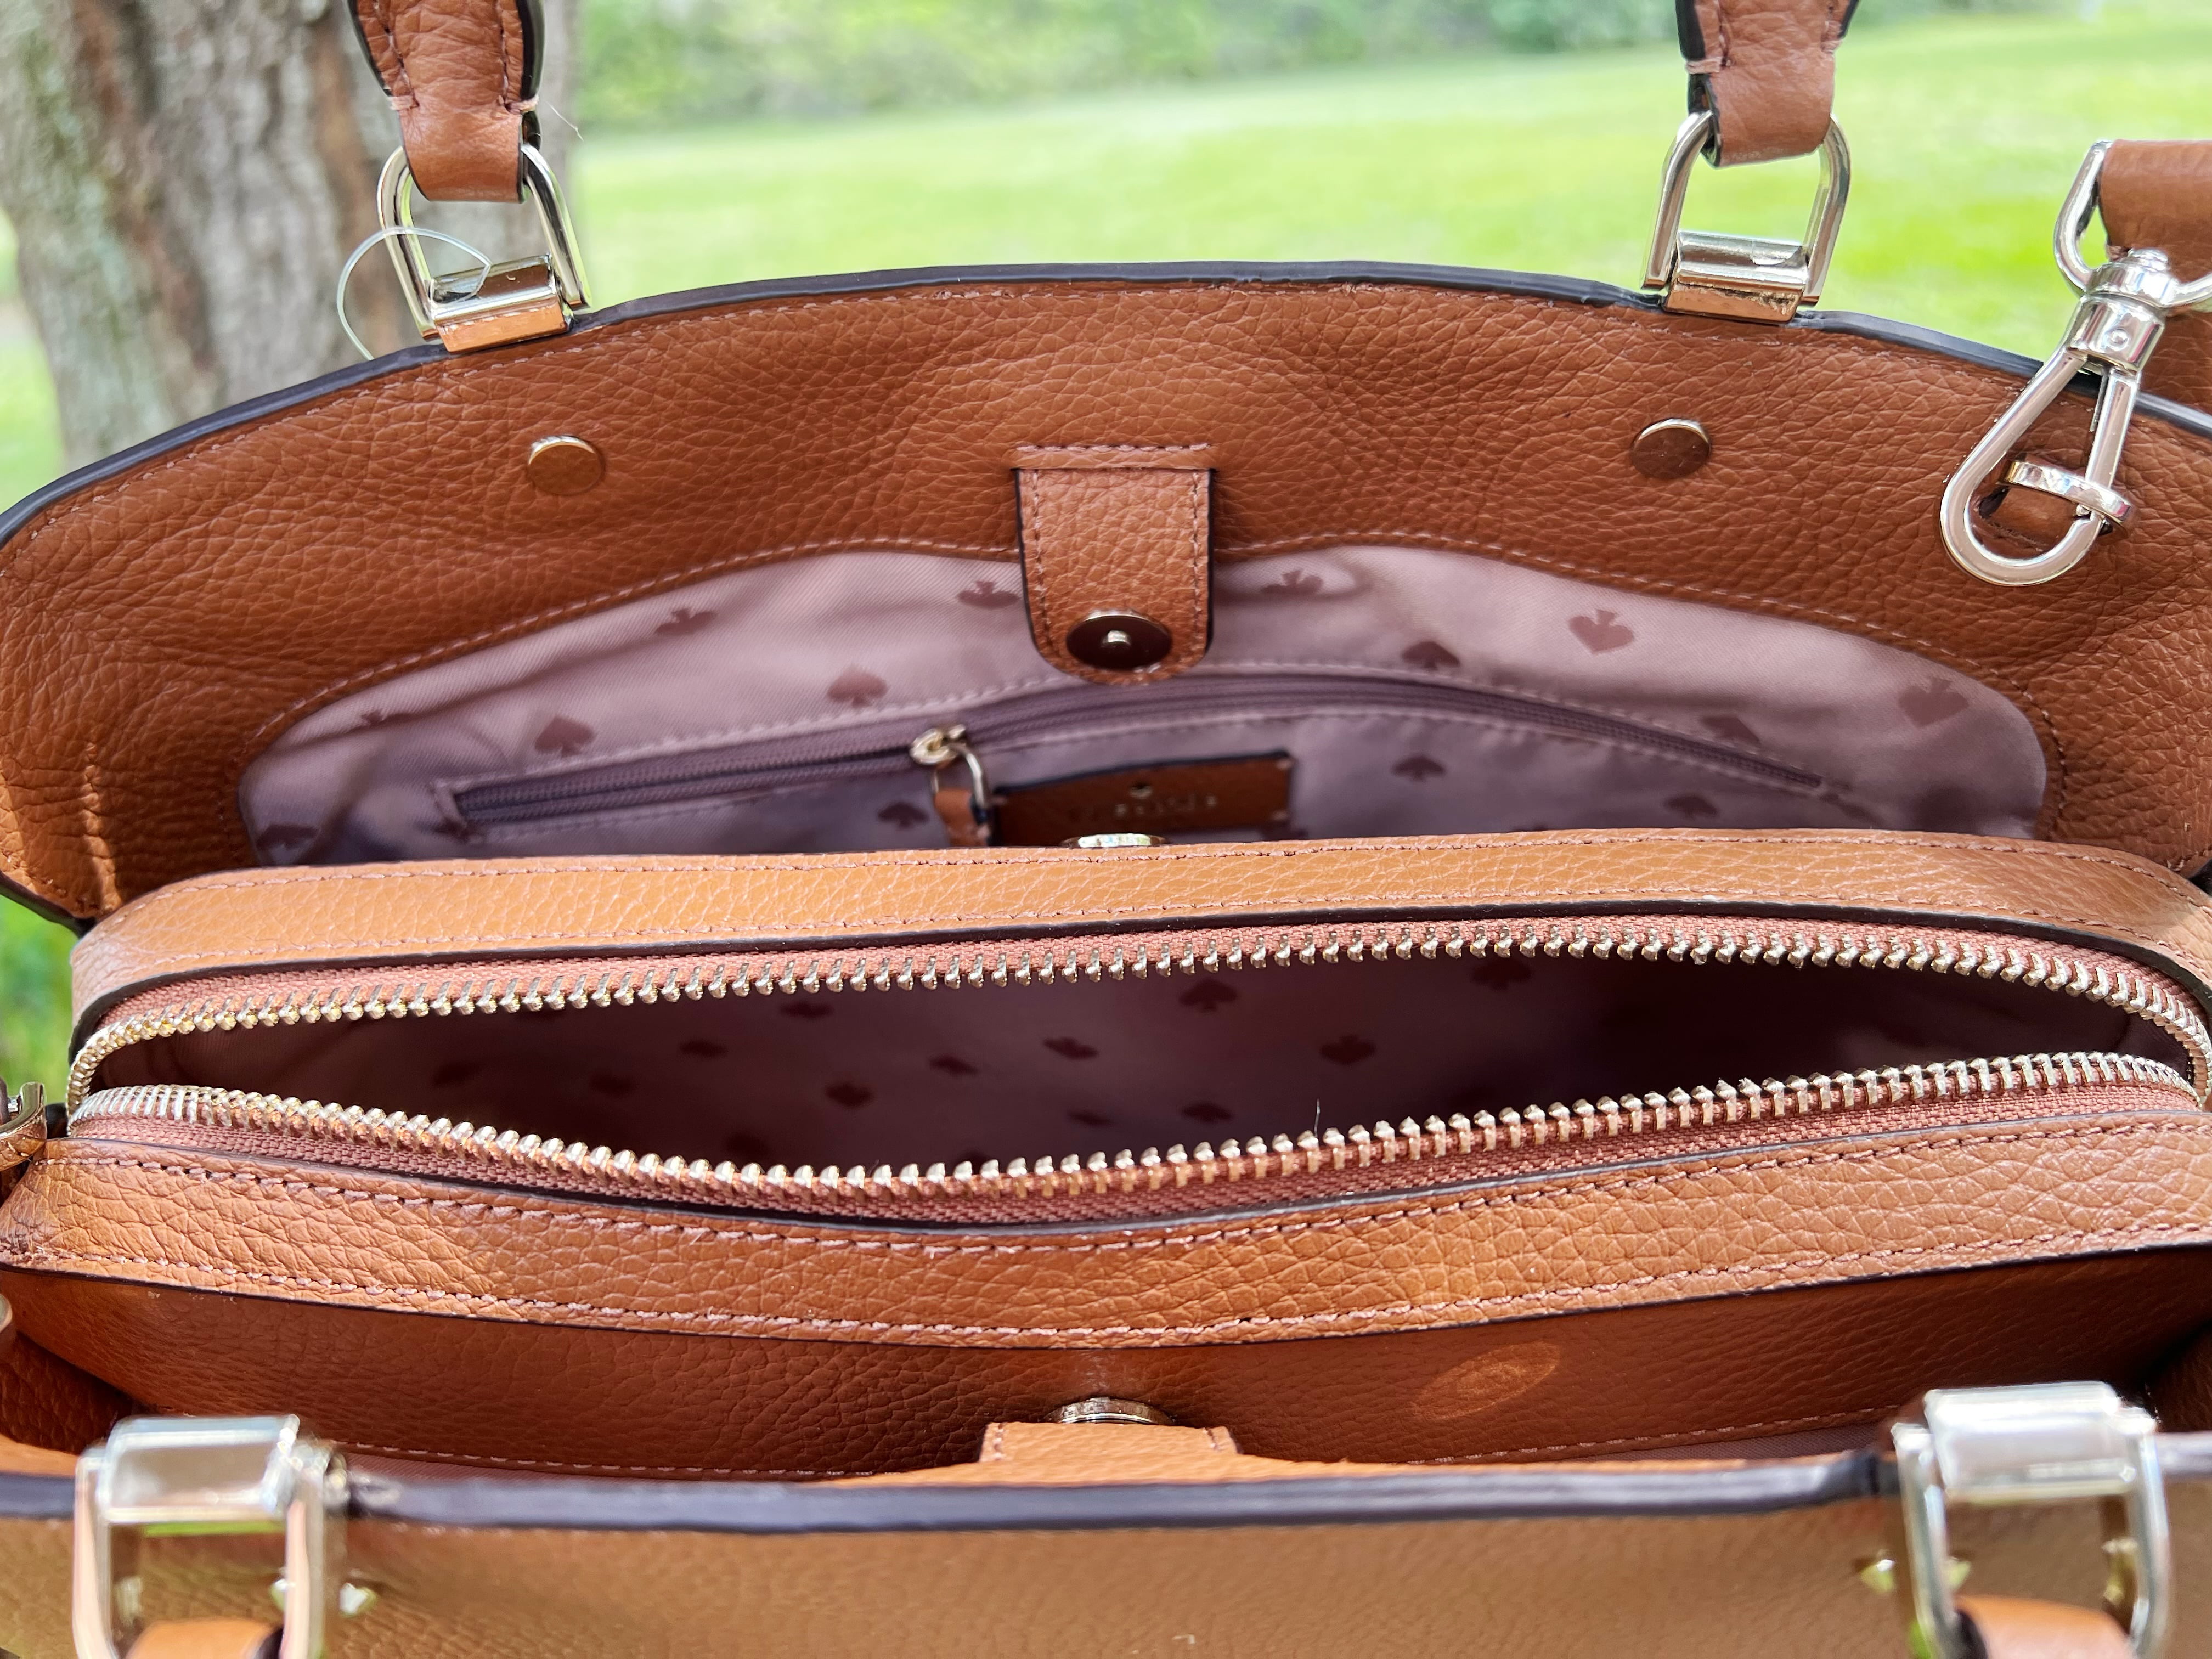 Kate Spade leila medium triple compartment satchel